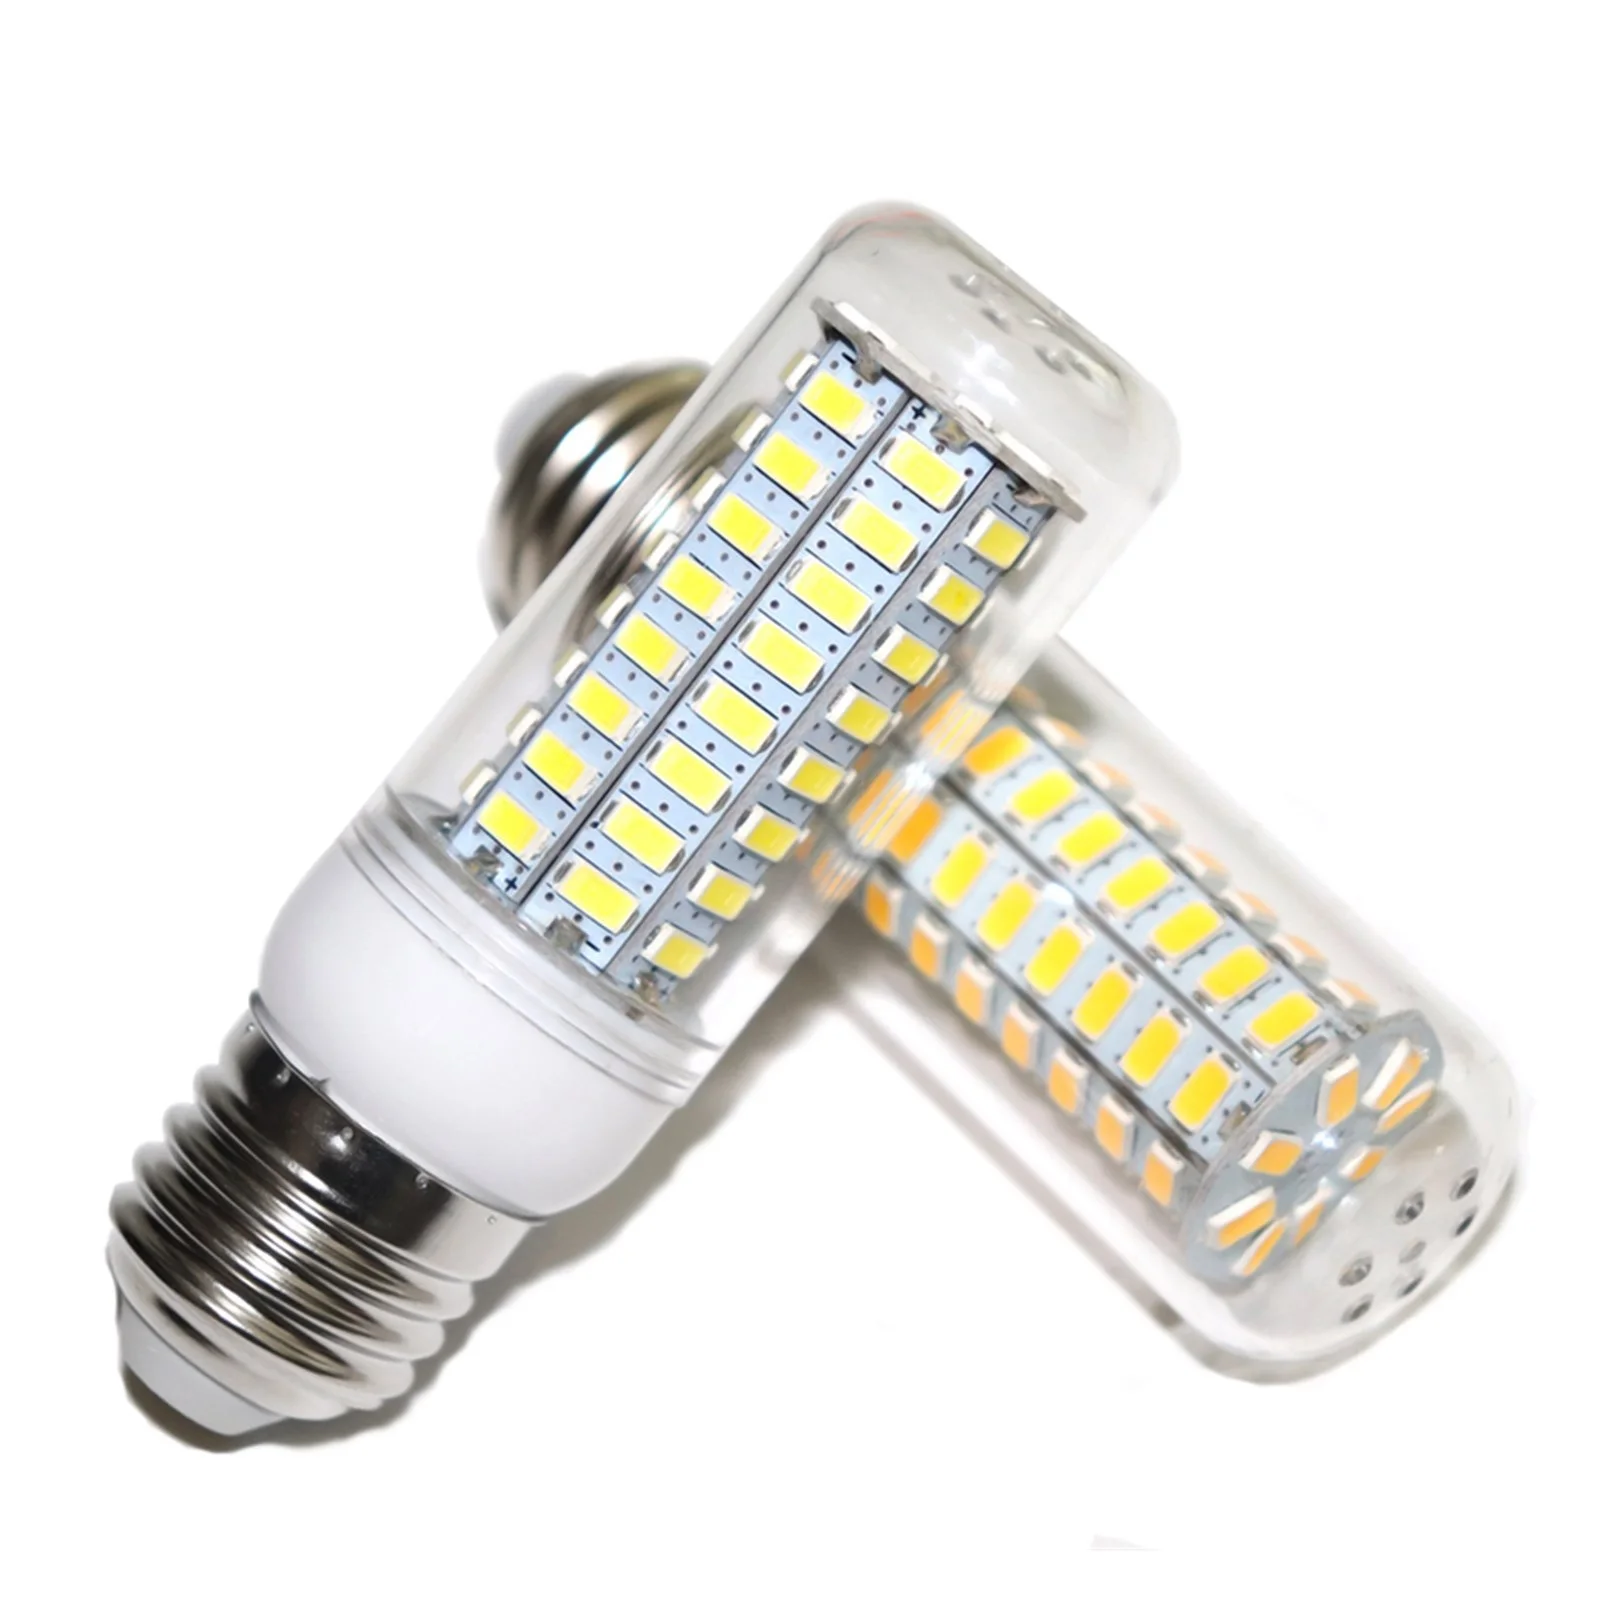 

LED Light E27 E14 3W 5W 7W 12W 15W 18W 20W 25W SMD 5730 Corn Bulb 220V Chandelier LED Candle Light Spotlight